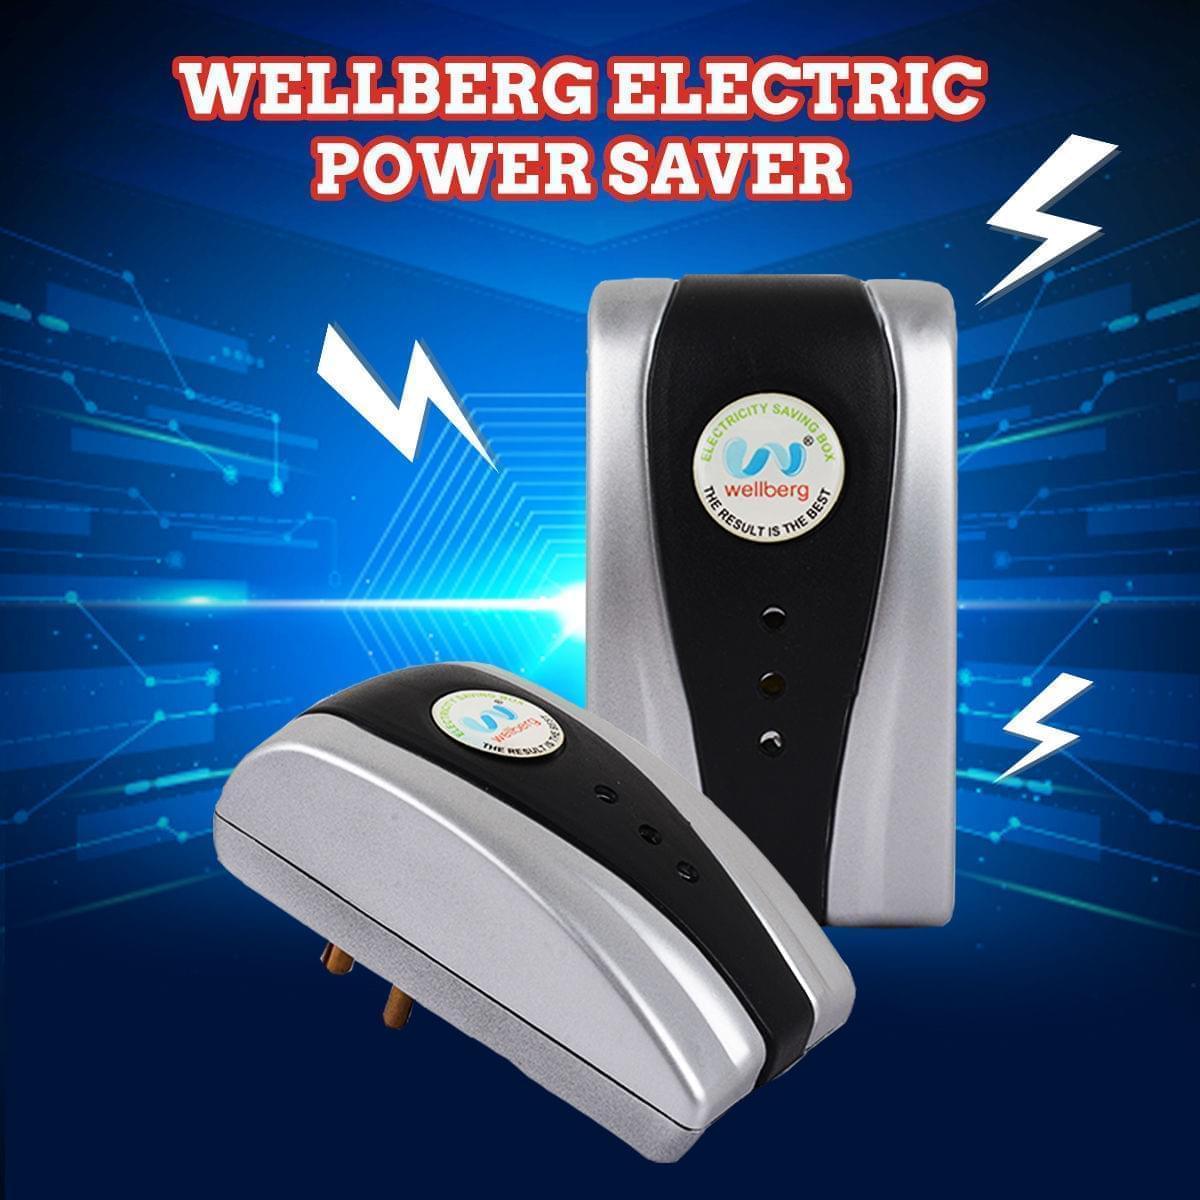 Wellberg Power Saver Electricity Bill Saver Save Upto 40% Electricity Bill - WELLBERG